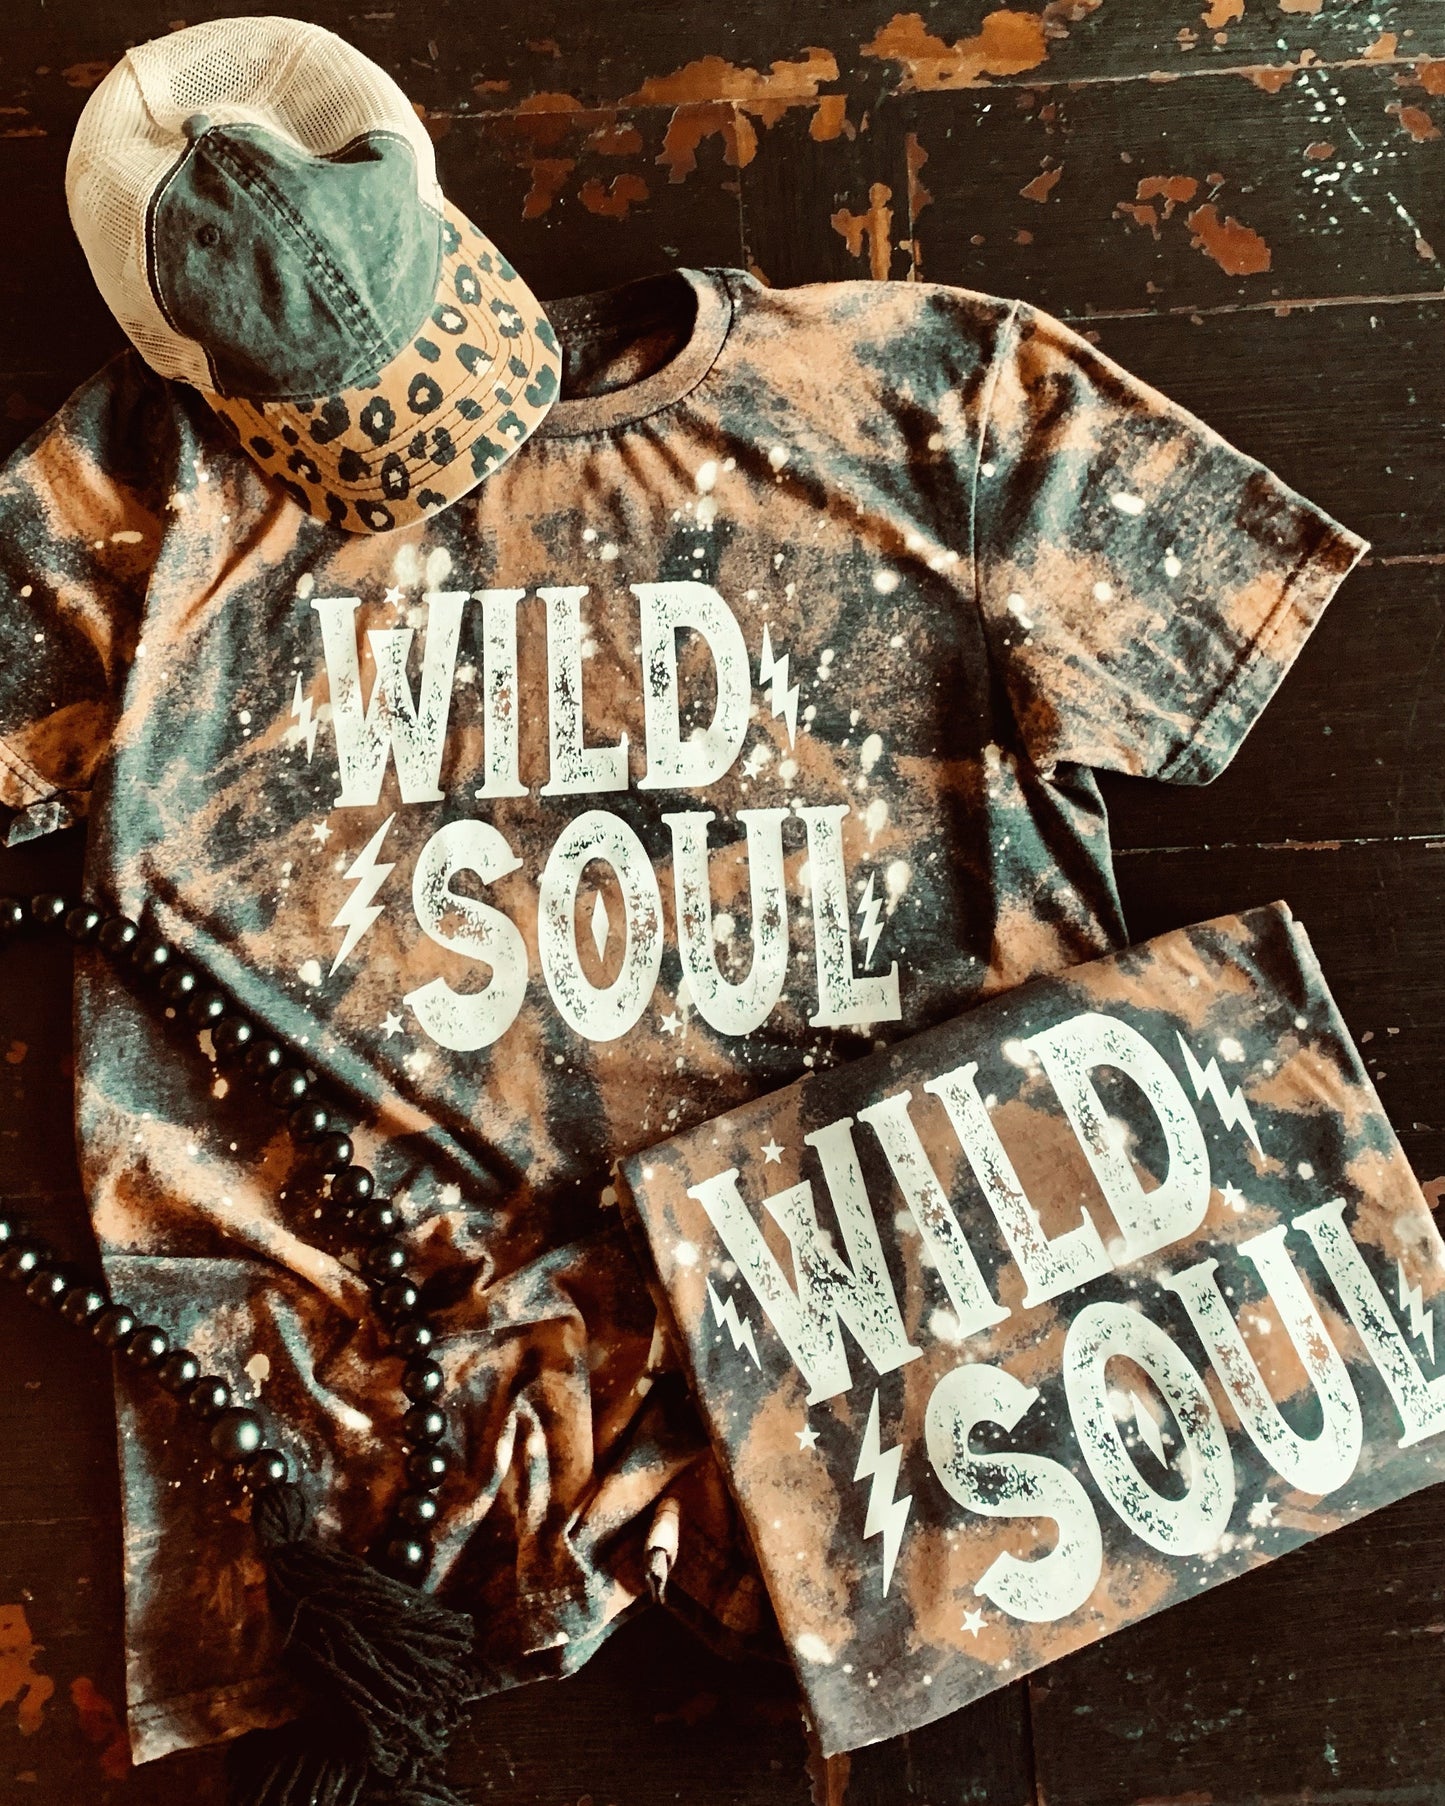 Wild soul